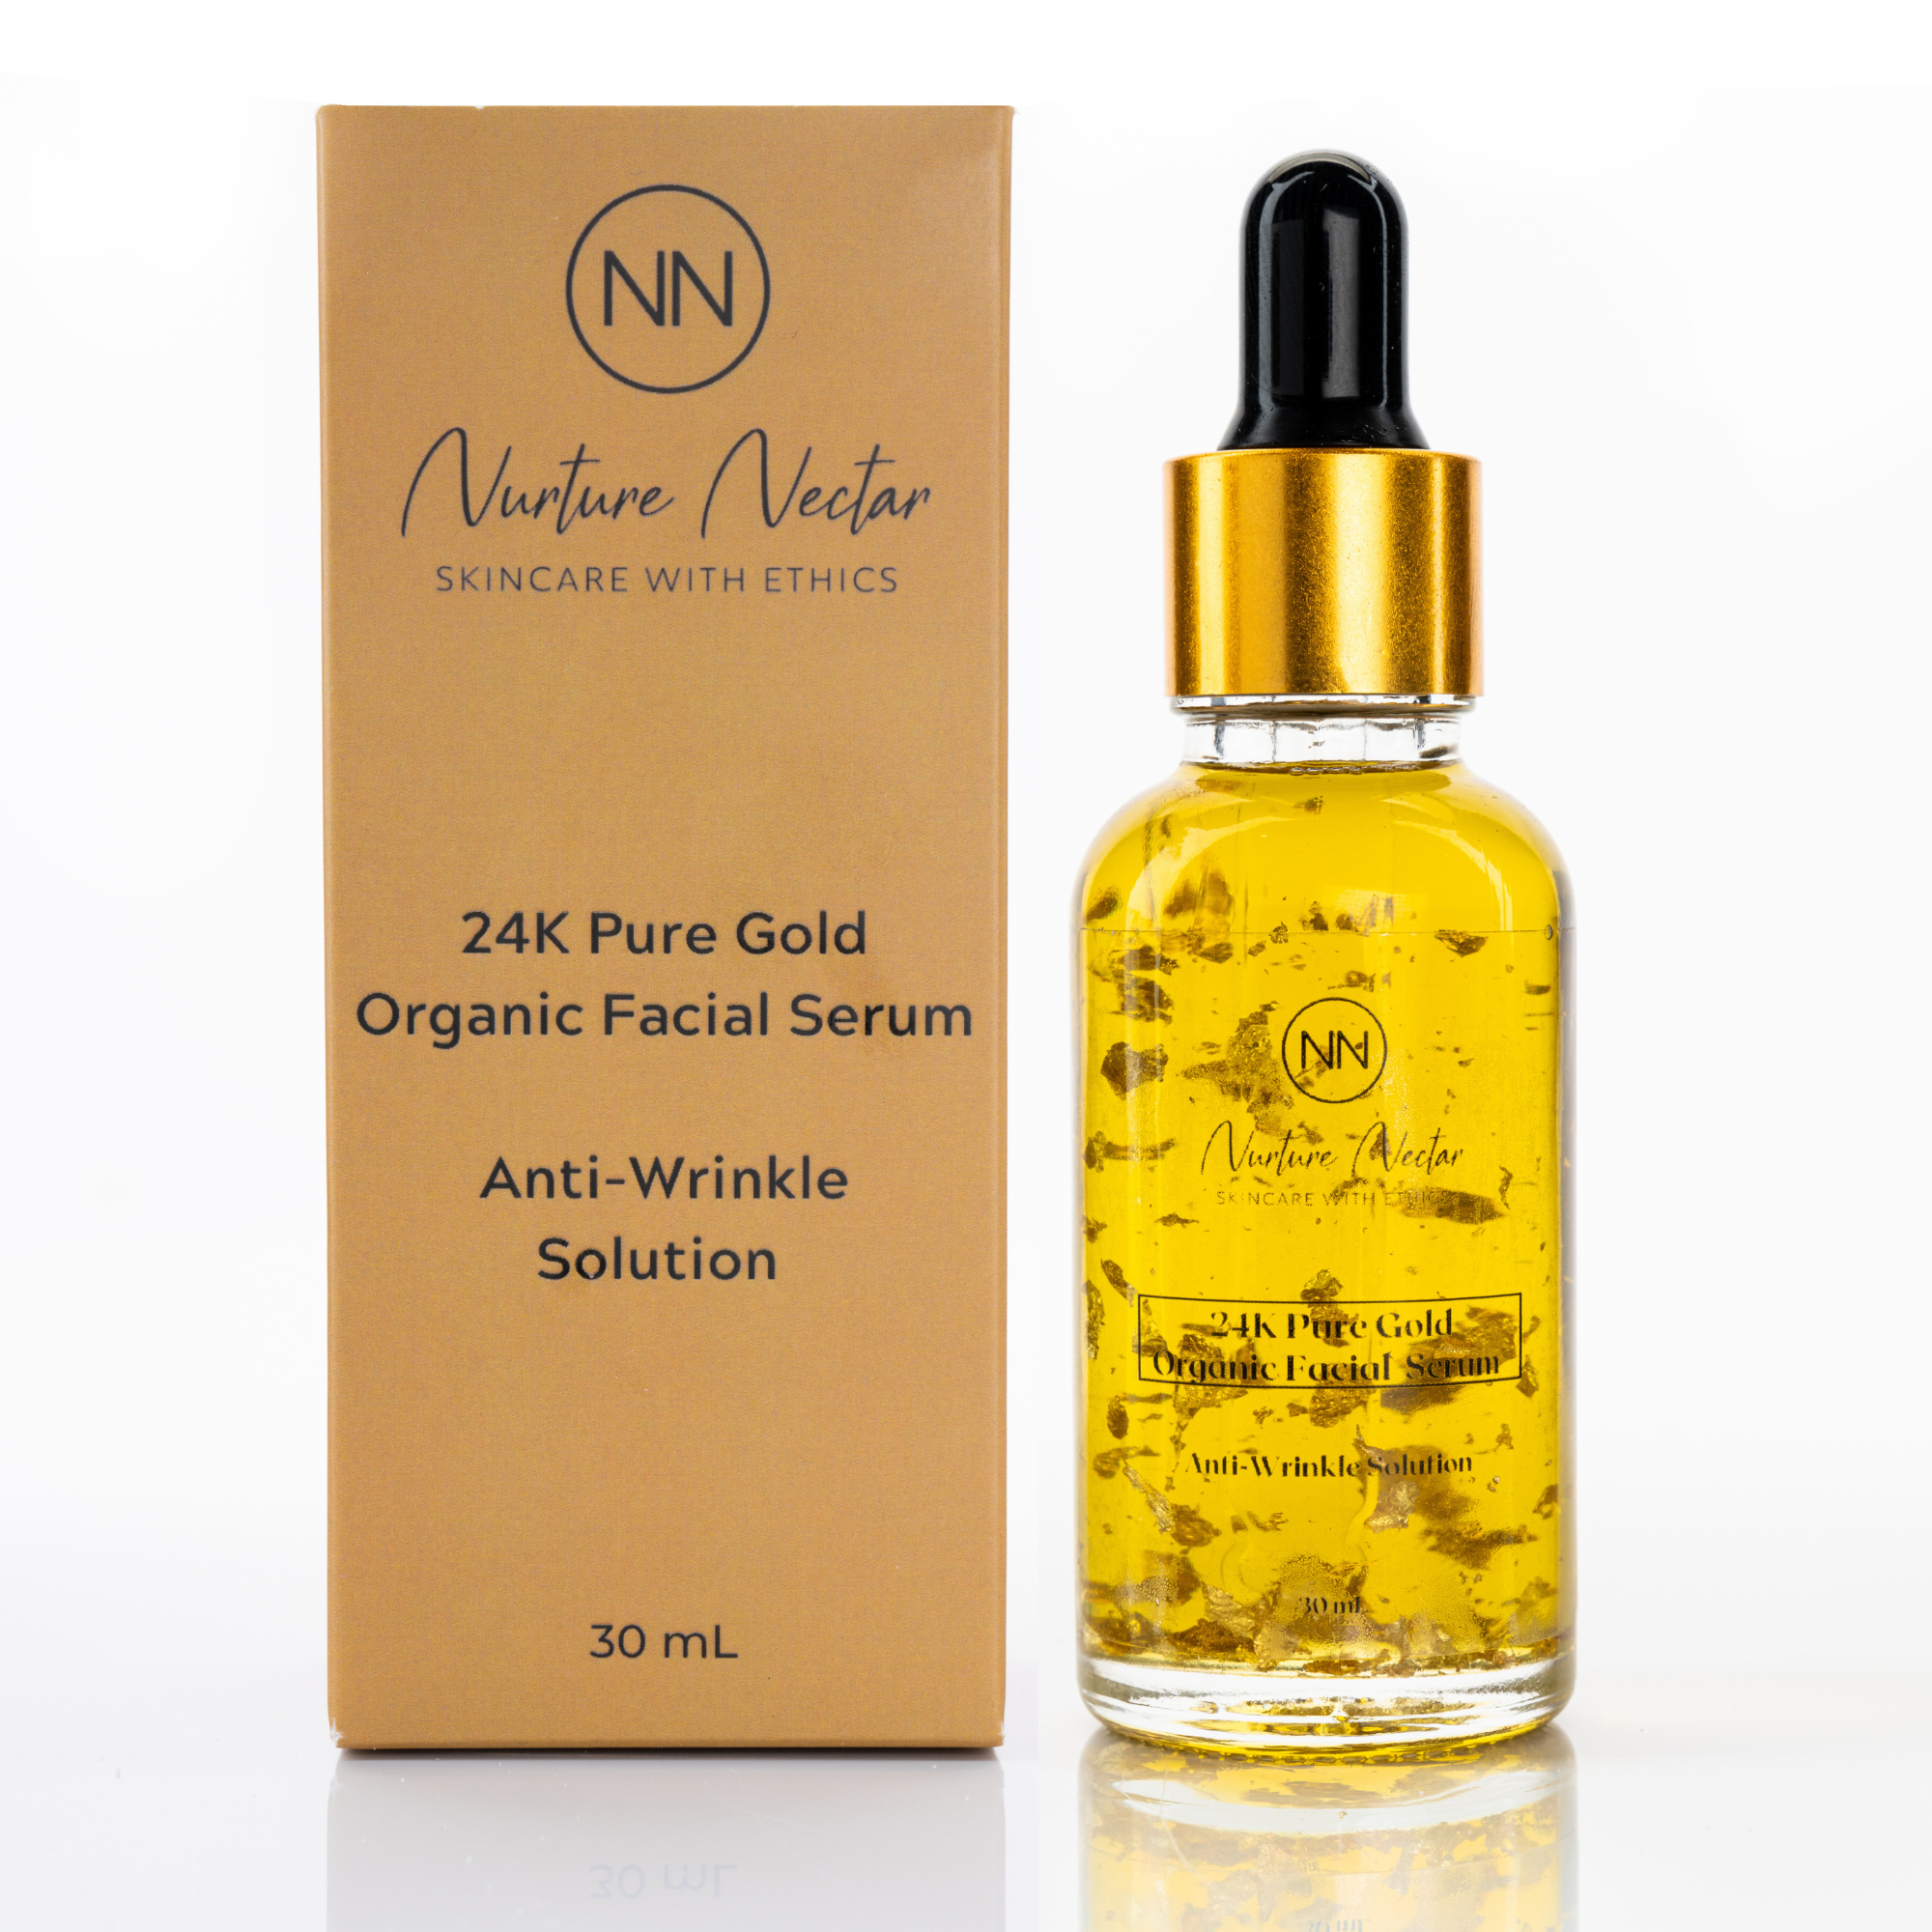 24K Pure Gold Organic Facial Serum Anti-Wrinkle Solution